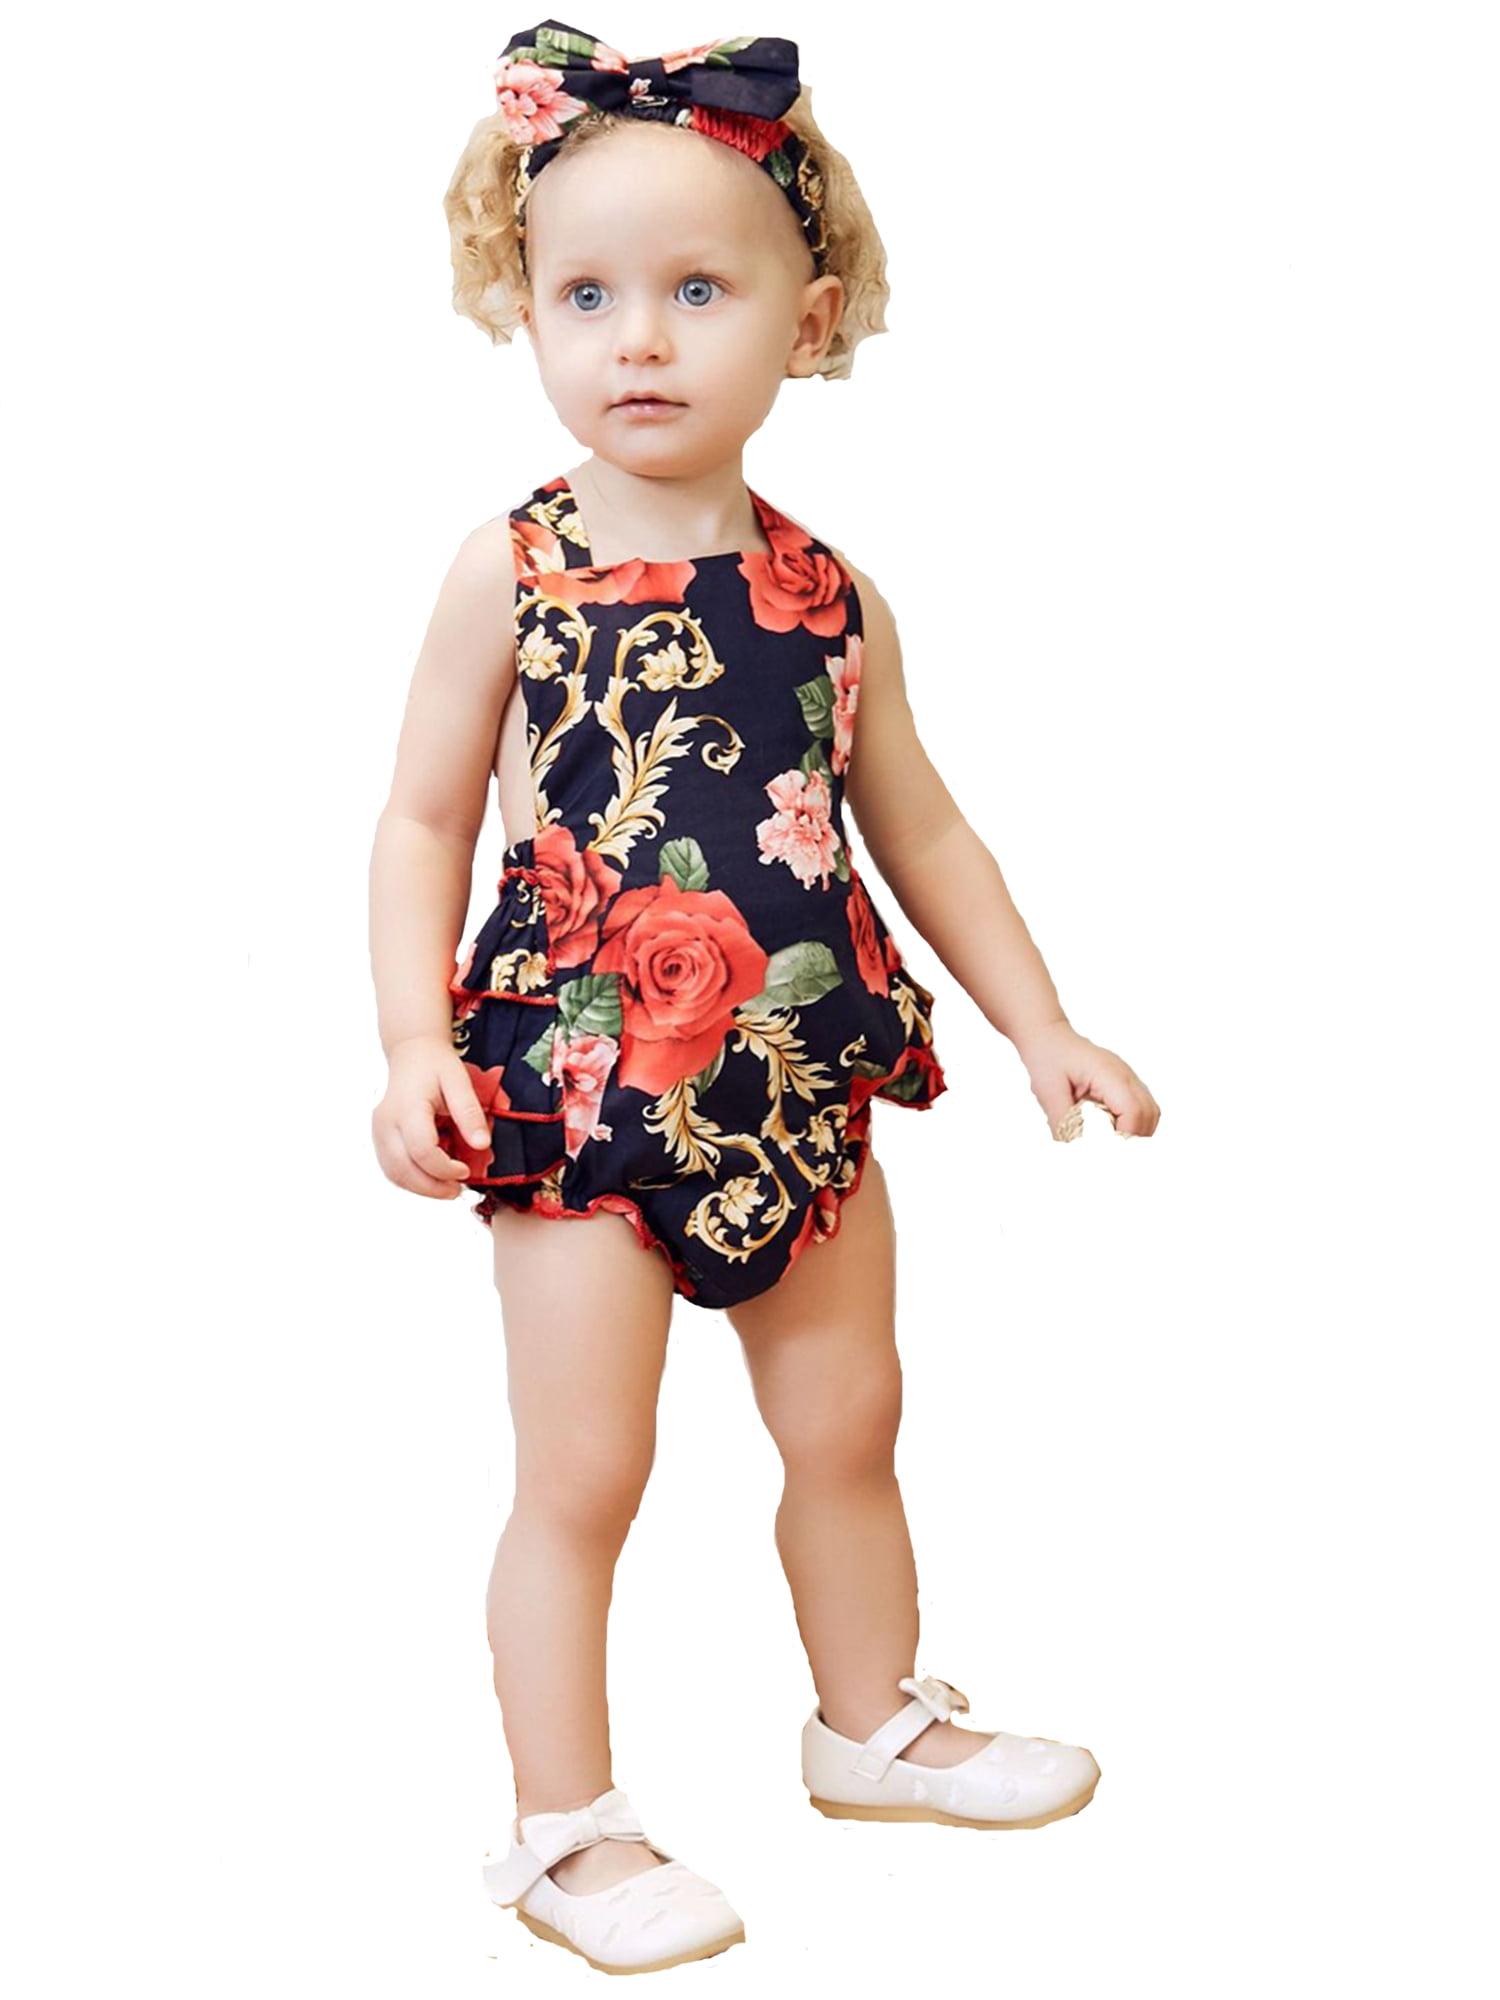 Summer Newborn Baby Girl Outfits Clothes Floral Romper Jumpsuit Bodysuit Sunsuit